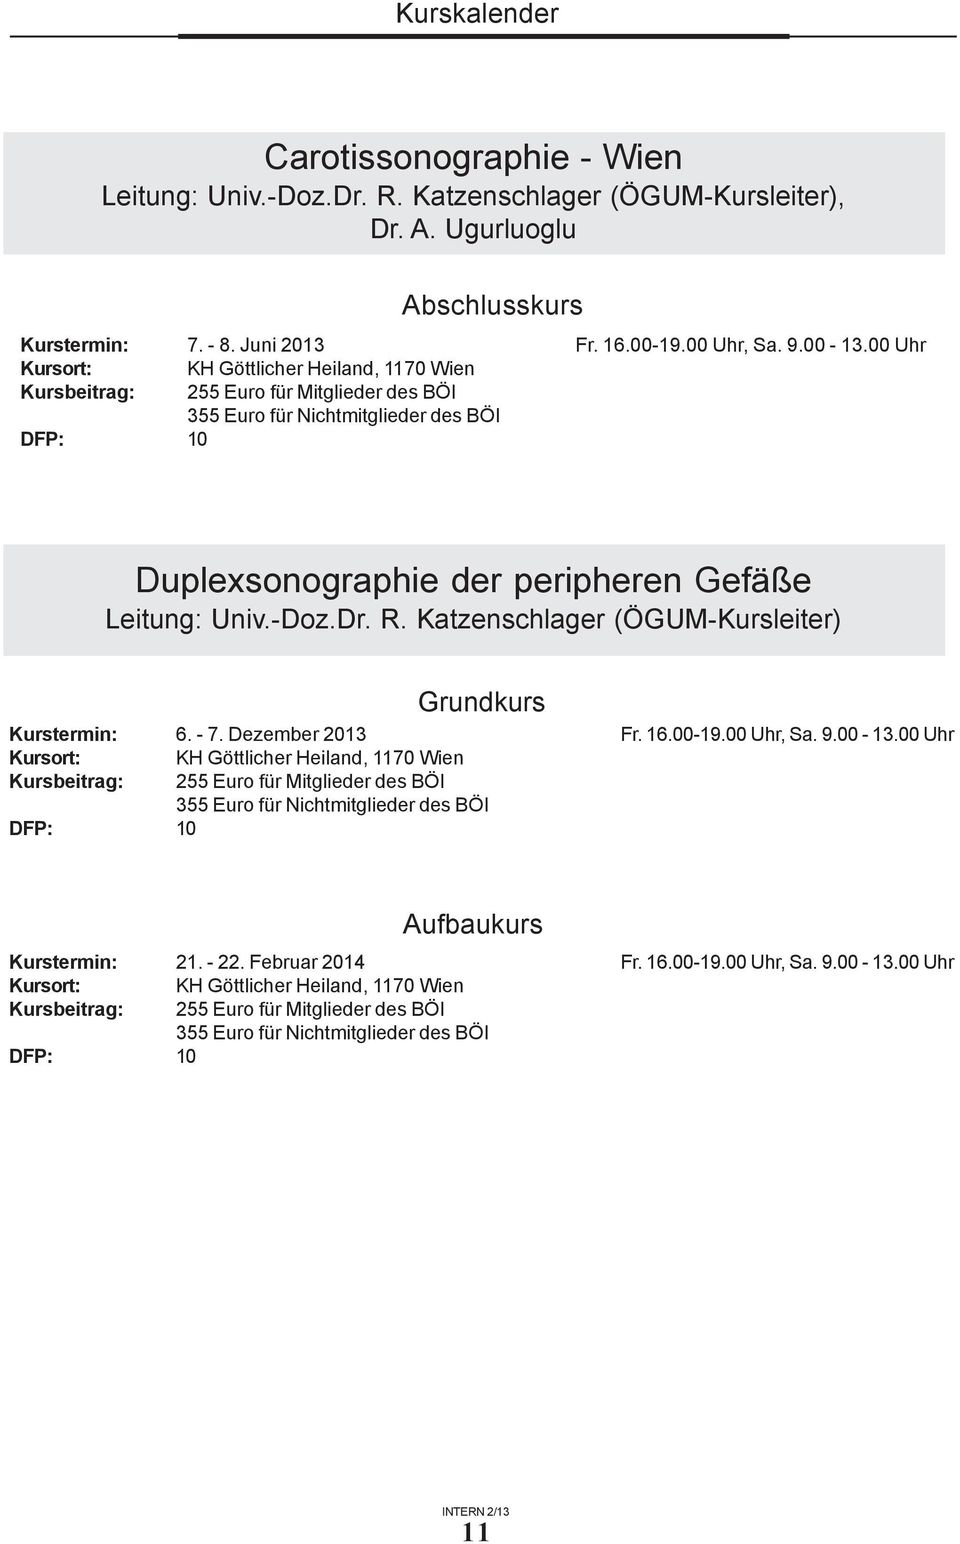 Dr. R. Katzenschlager (ÖGUM-Kursleiter) Grundkurs Kurstermin: 6. - 7. Dezember 2013 Fr. 16.00-19.00 Uhr, Sa. 9.00-13.